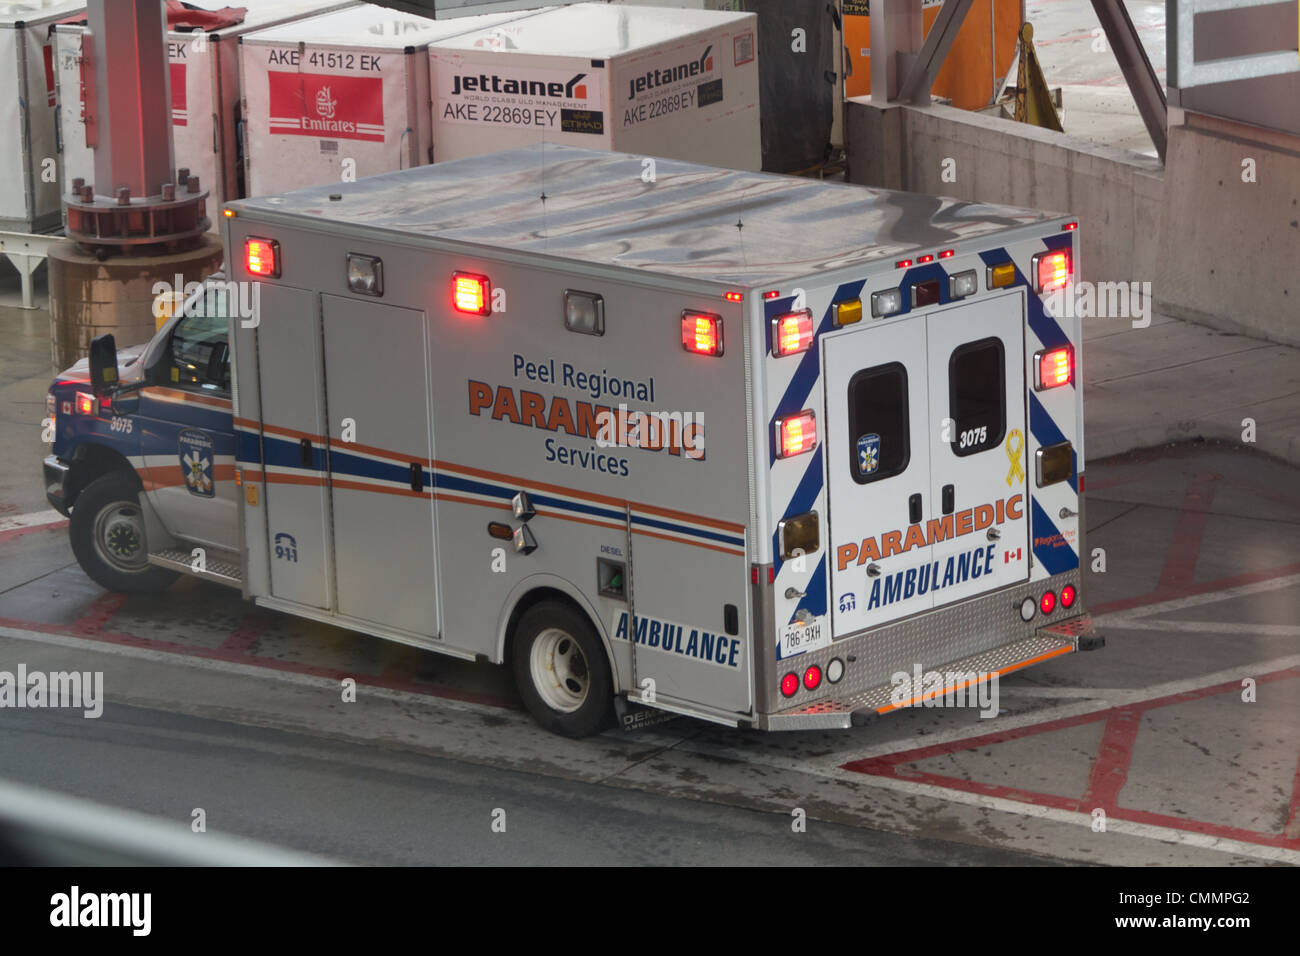 Ambulance at Pearson Airport, Toronto, Canada Stock Photo